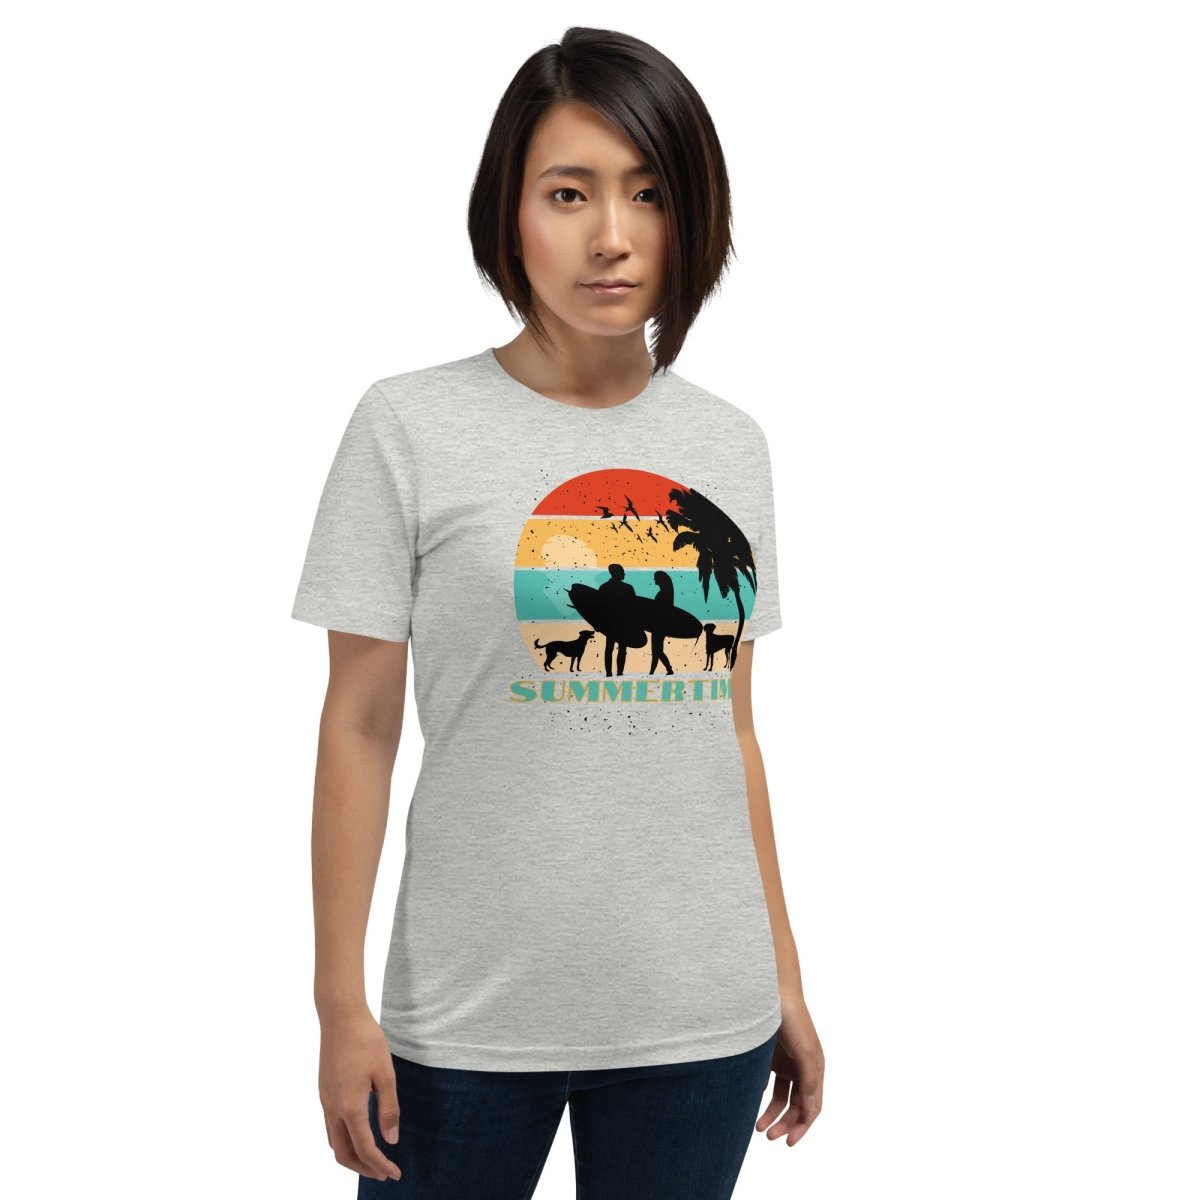 Dog Family Summertime T-Shirt - DoggyLoveandMore